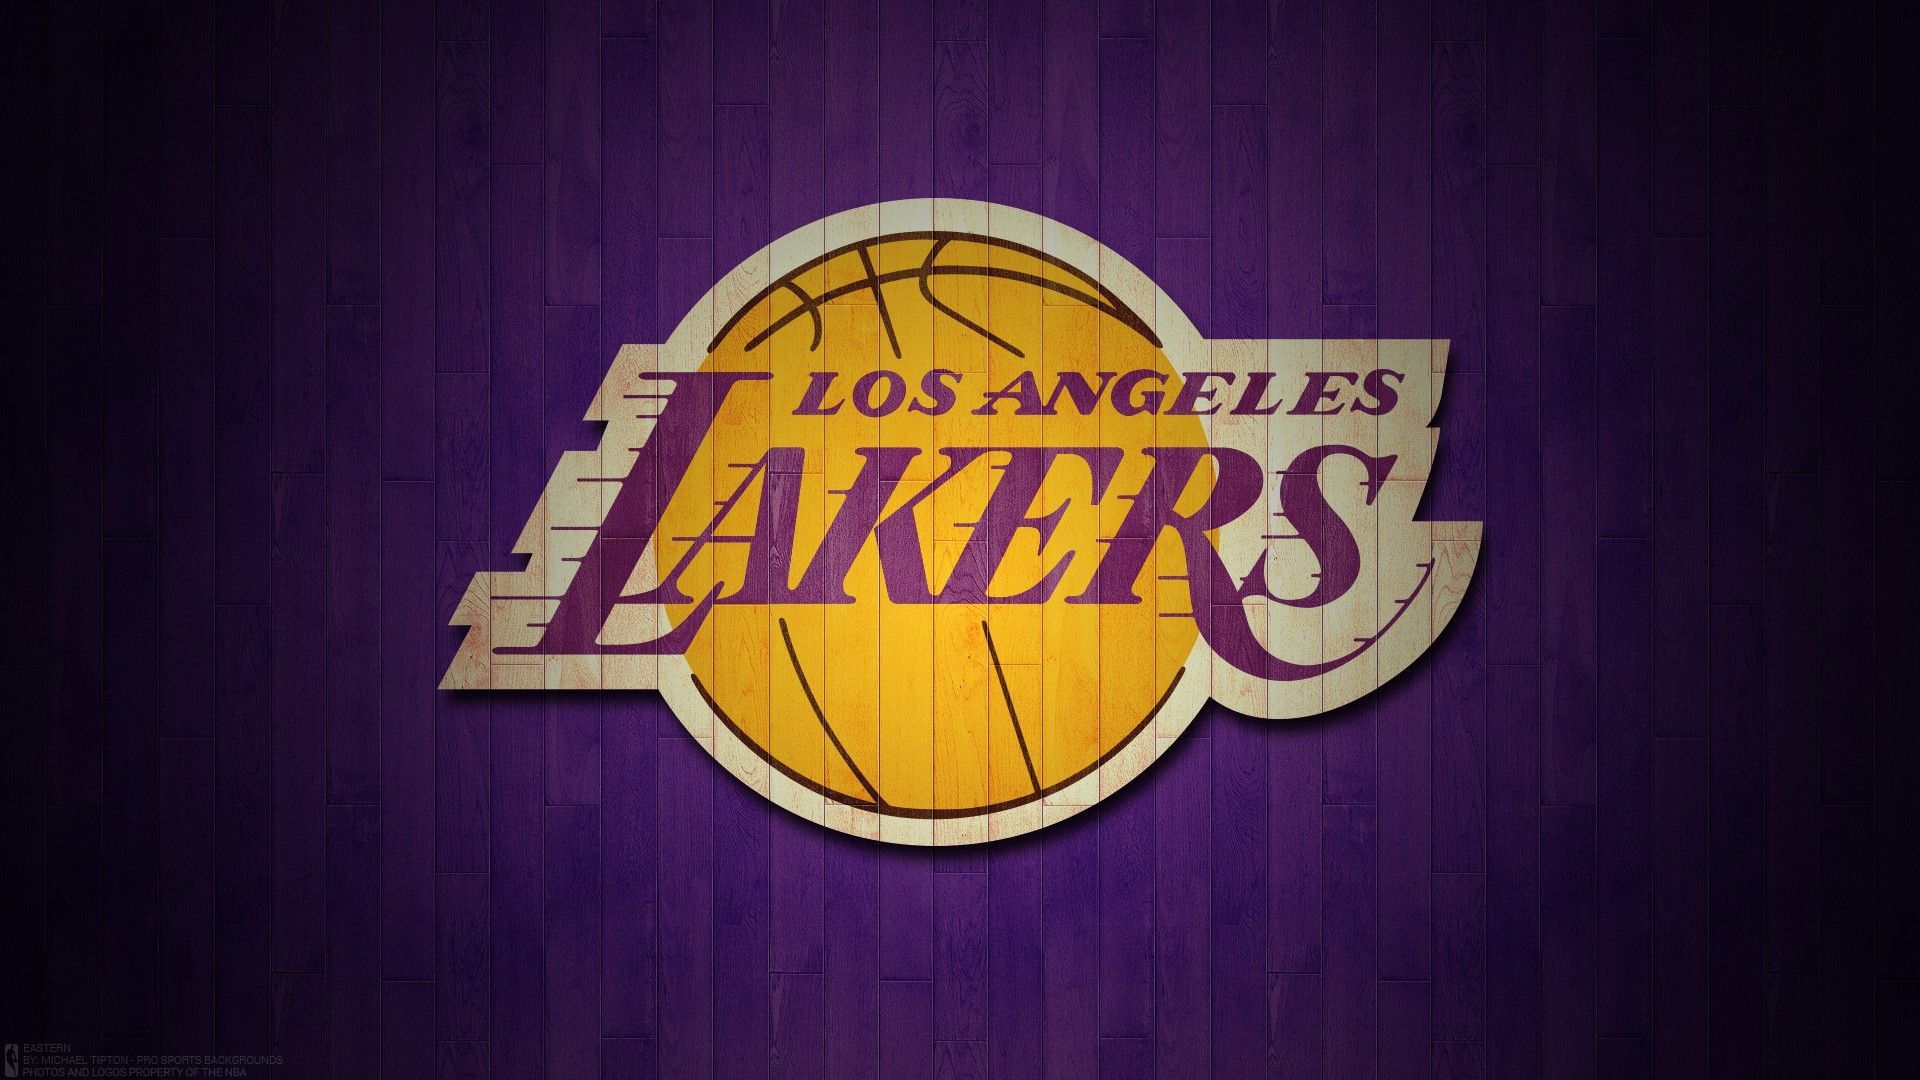 LA LAKERS WALLPAPER FOR MAC BACKGROUNDS. Lakers wallpaper, Lakers wallpaper, La lakers wallpaper